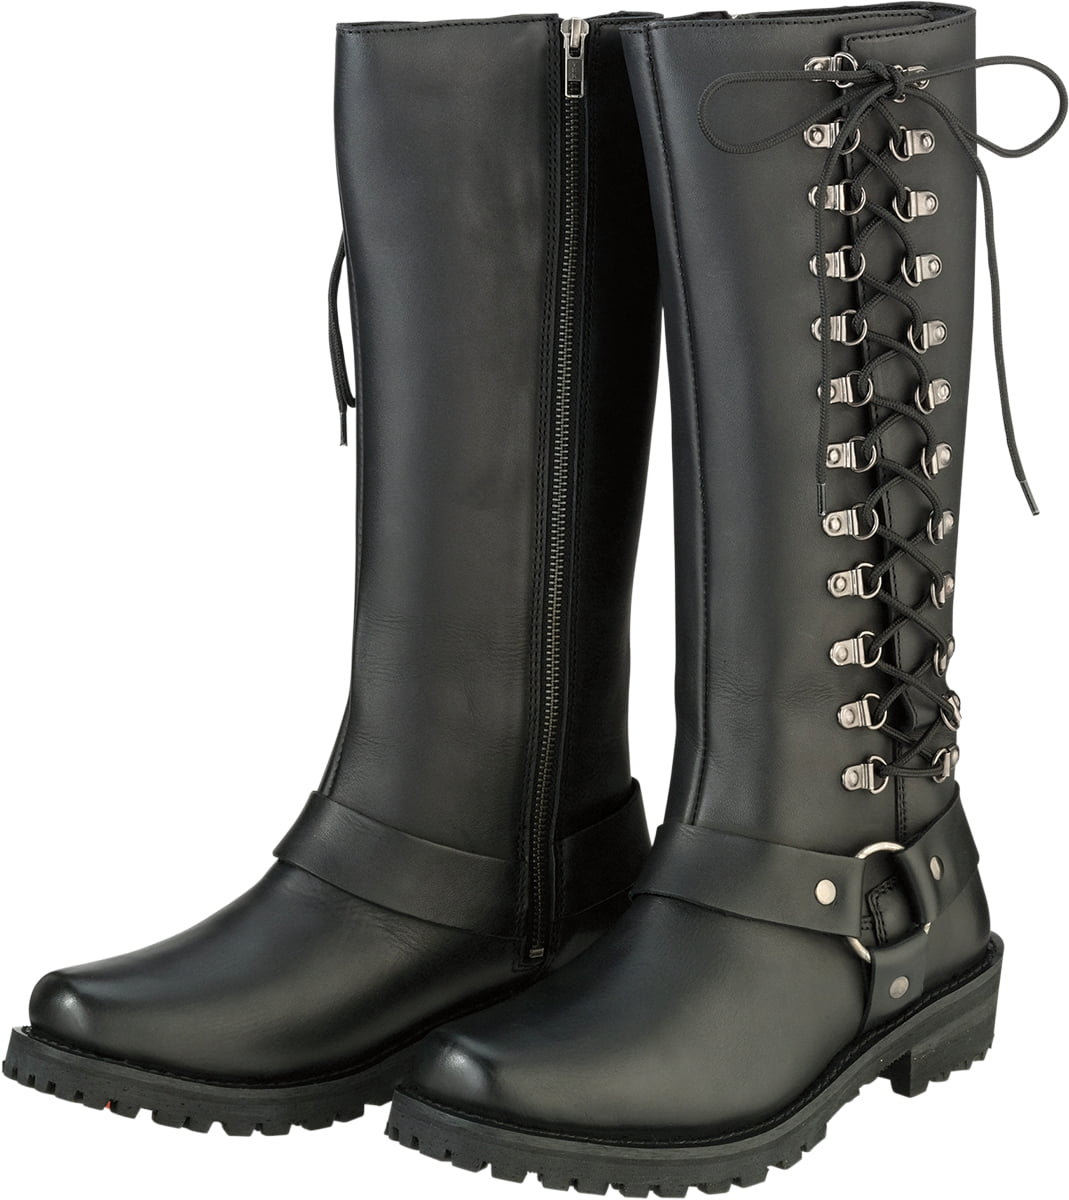 Z1R Savage Women's Boot Black 8 3403-0866 - Walmart.com